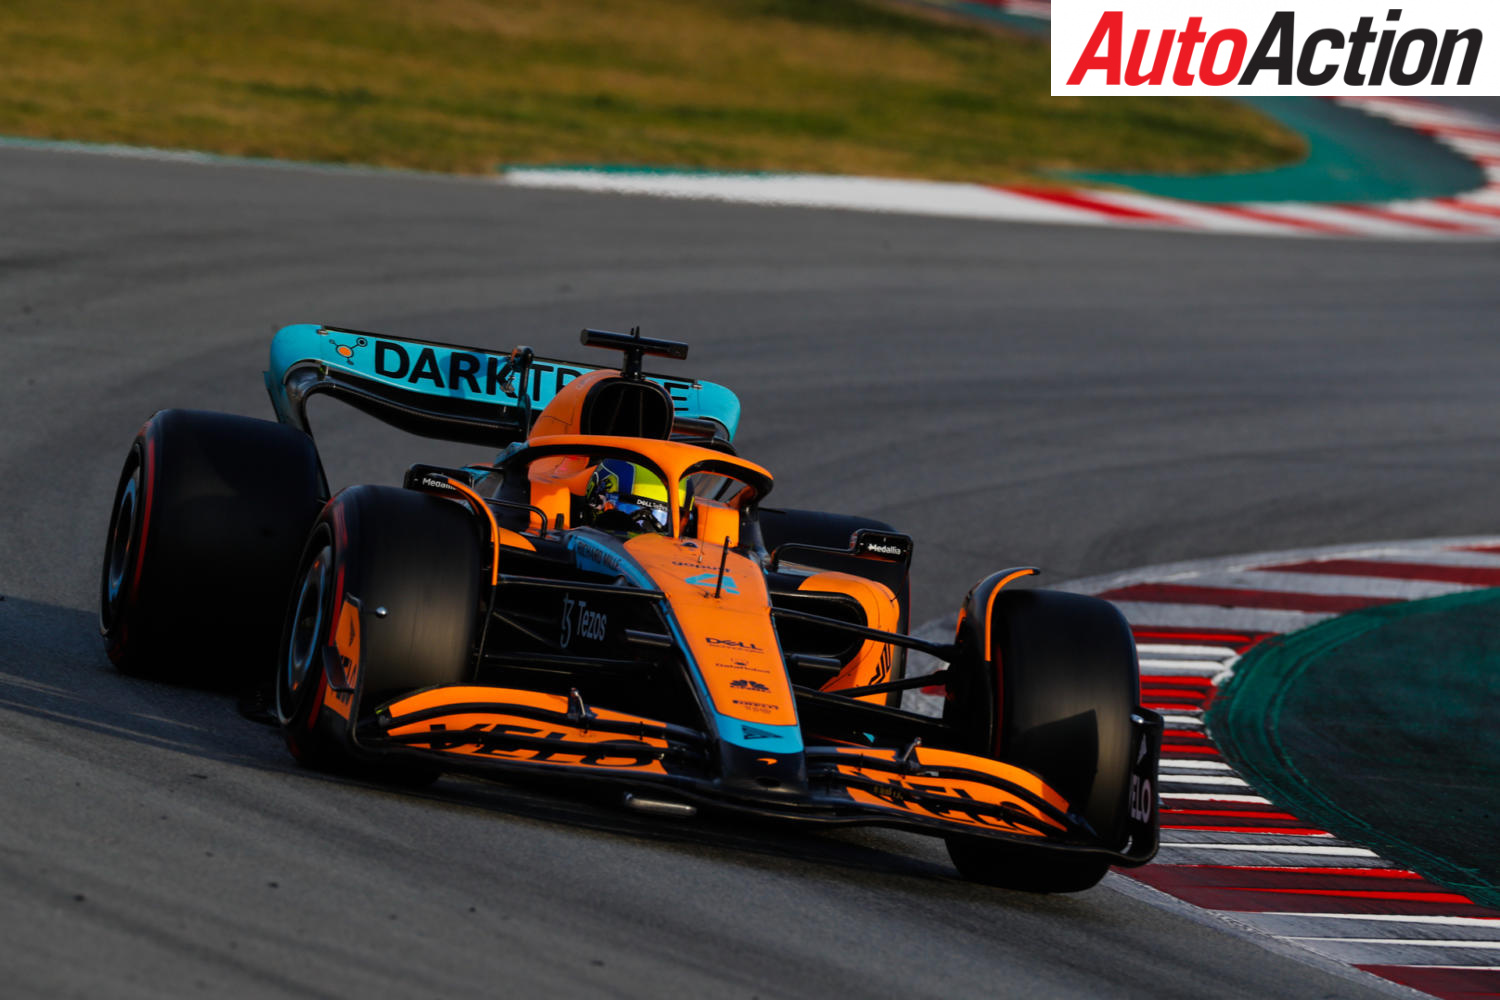 Car Of The Day: McLaren F1